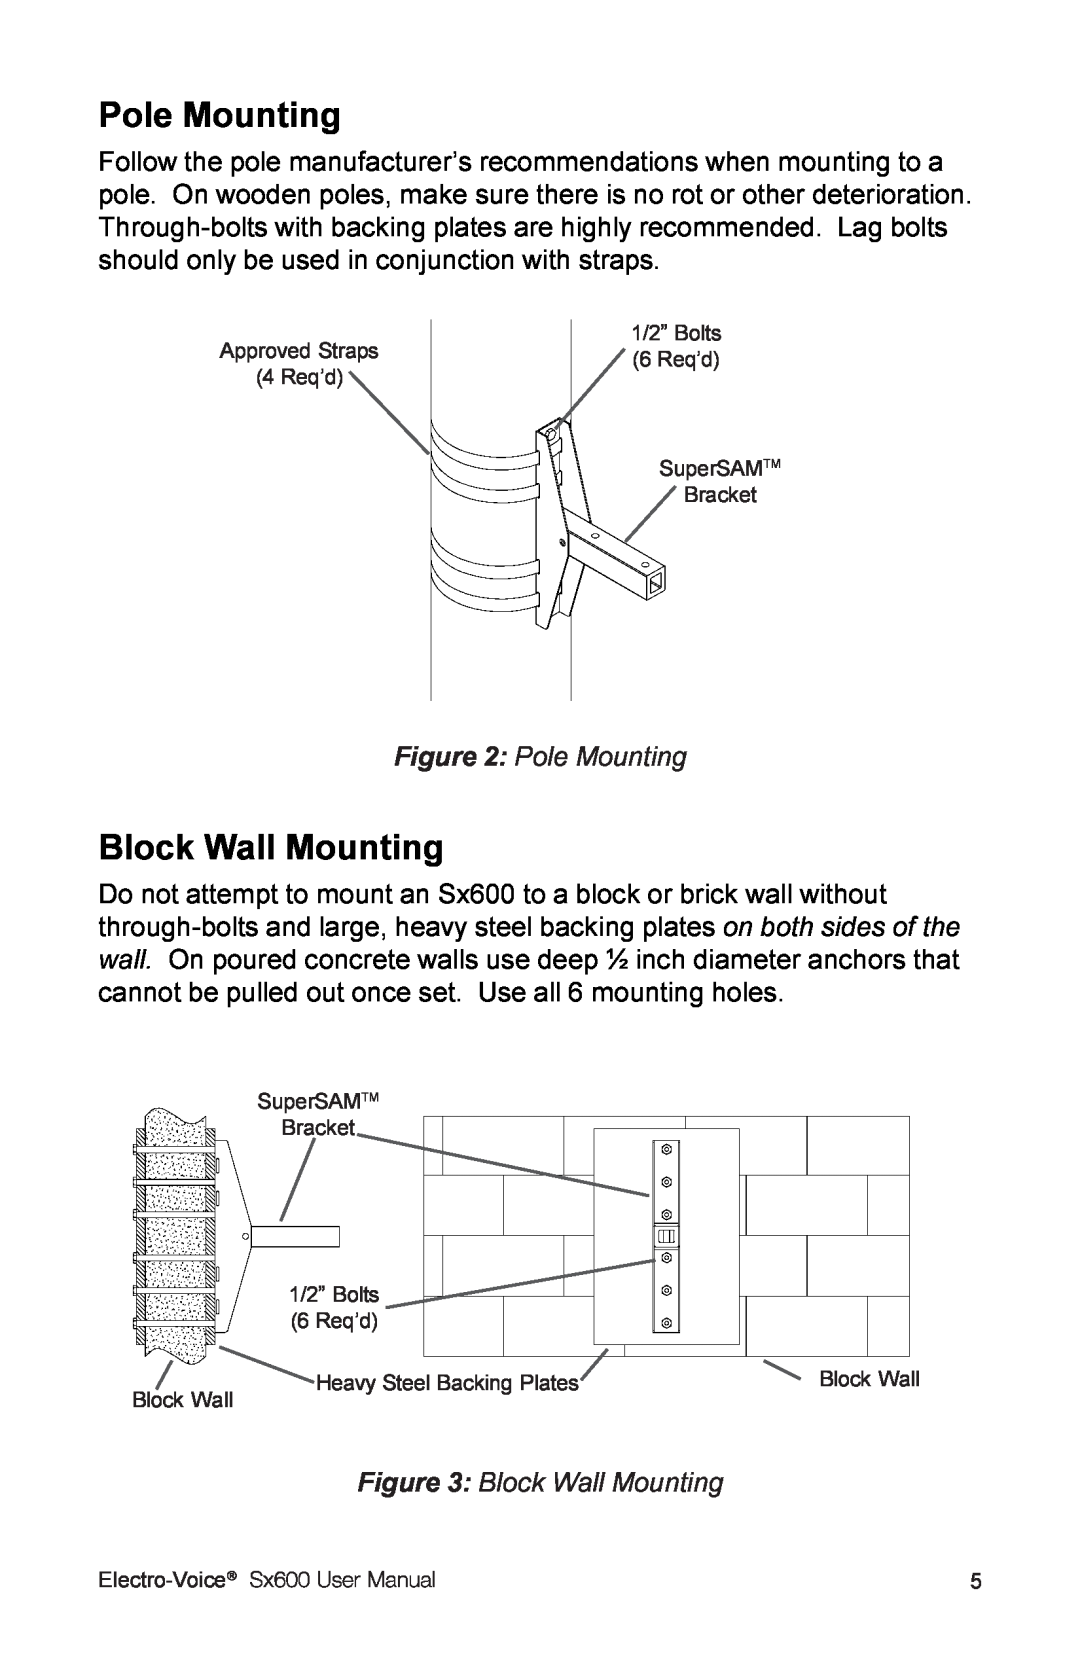 Electro-Voice Sx600 user manual Pole Mounting, Block Wall Mounting, Electro-Voice 